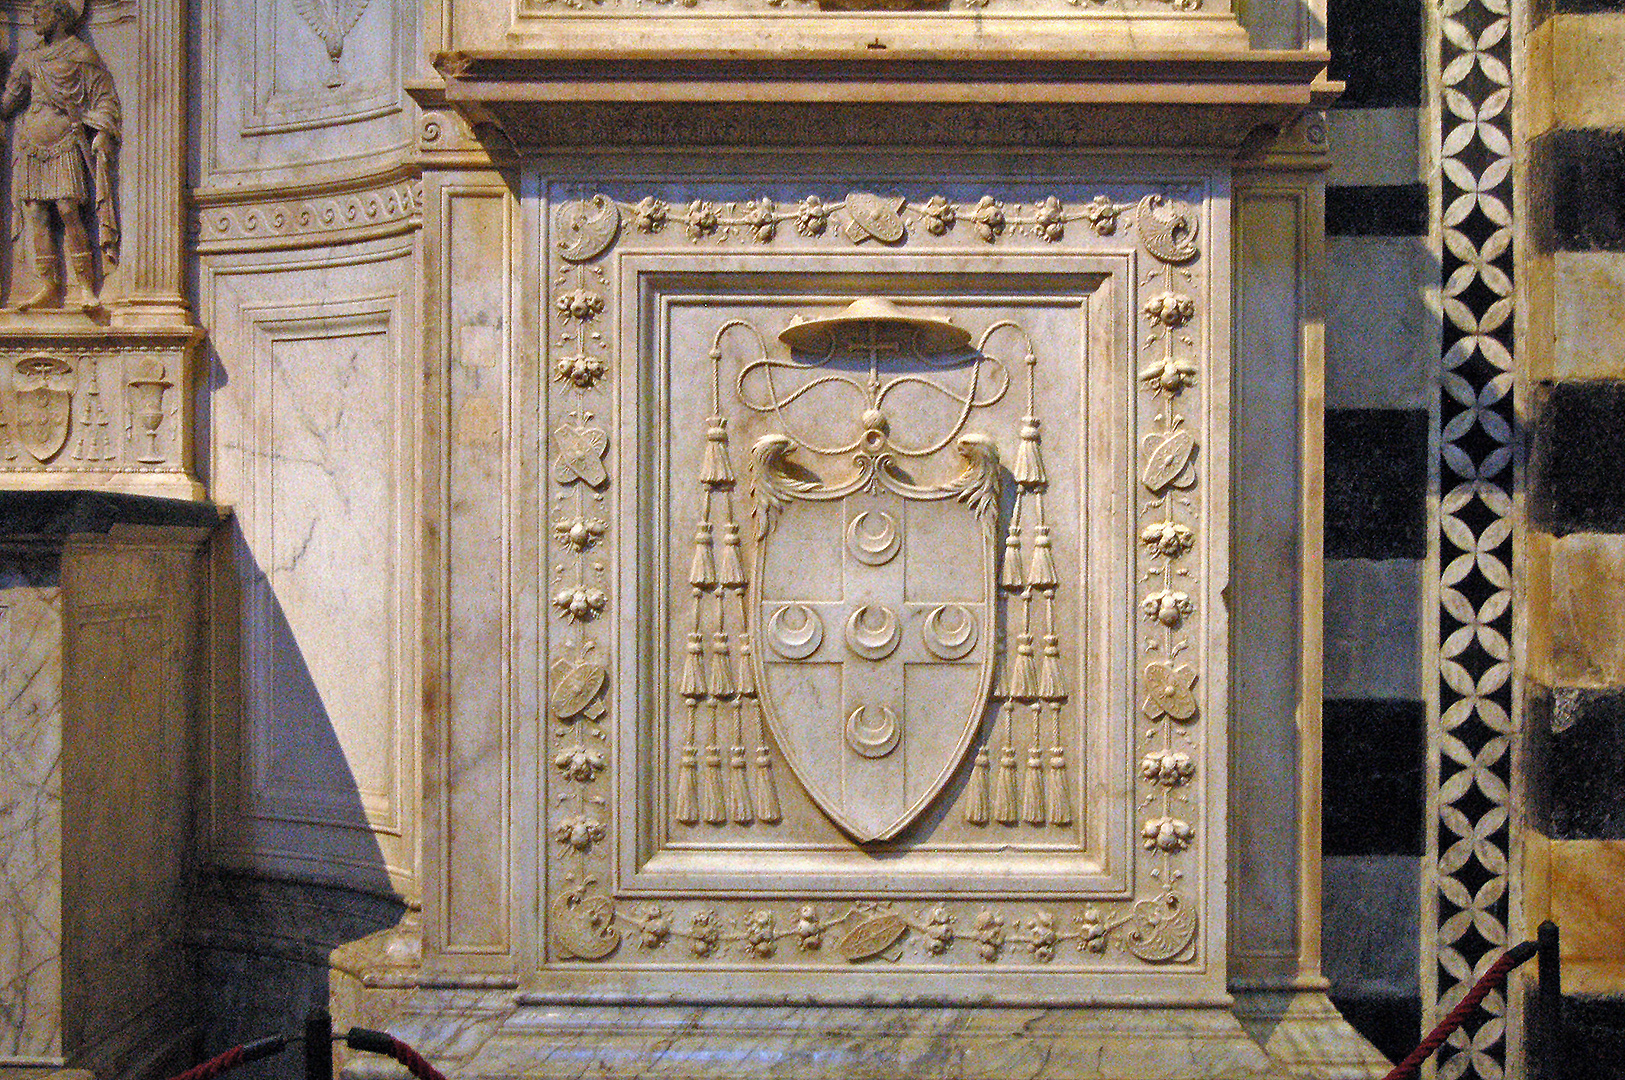 Dom van Siena, Toscane, Itali; Siena Cathedral, Tuscany, Italy